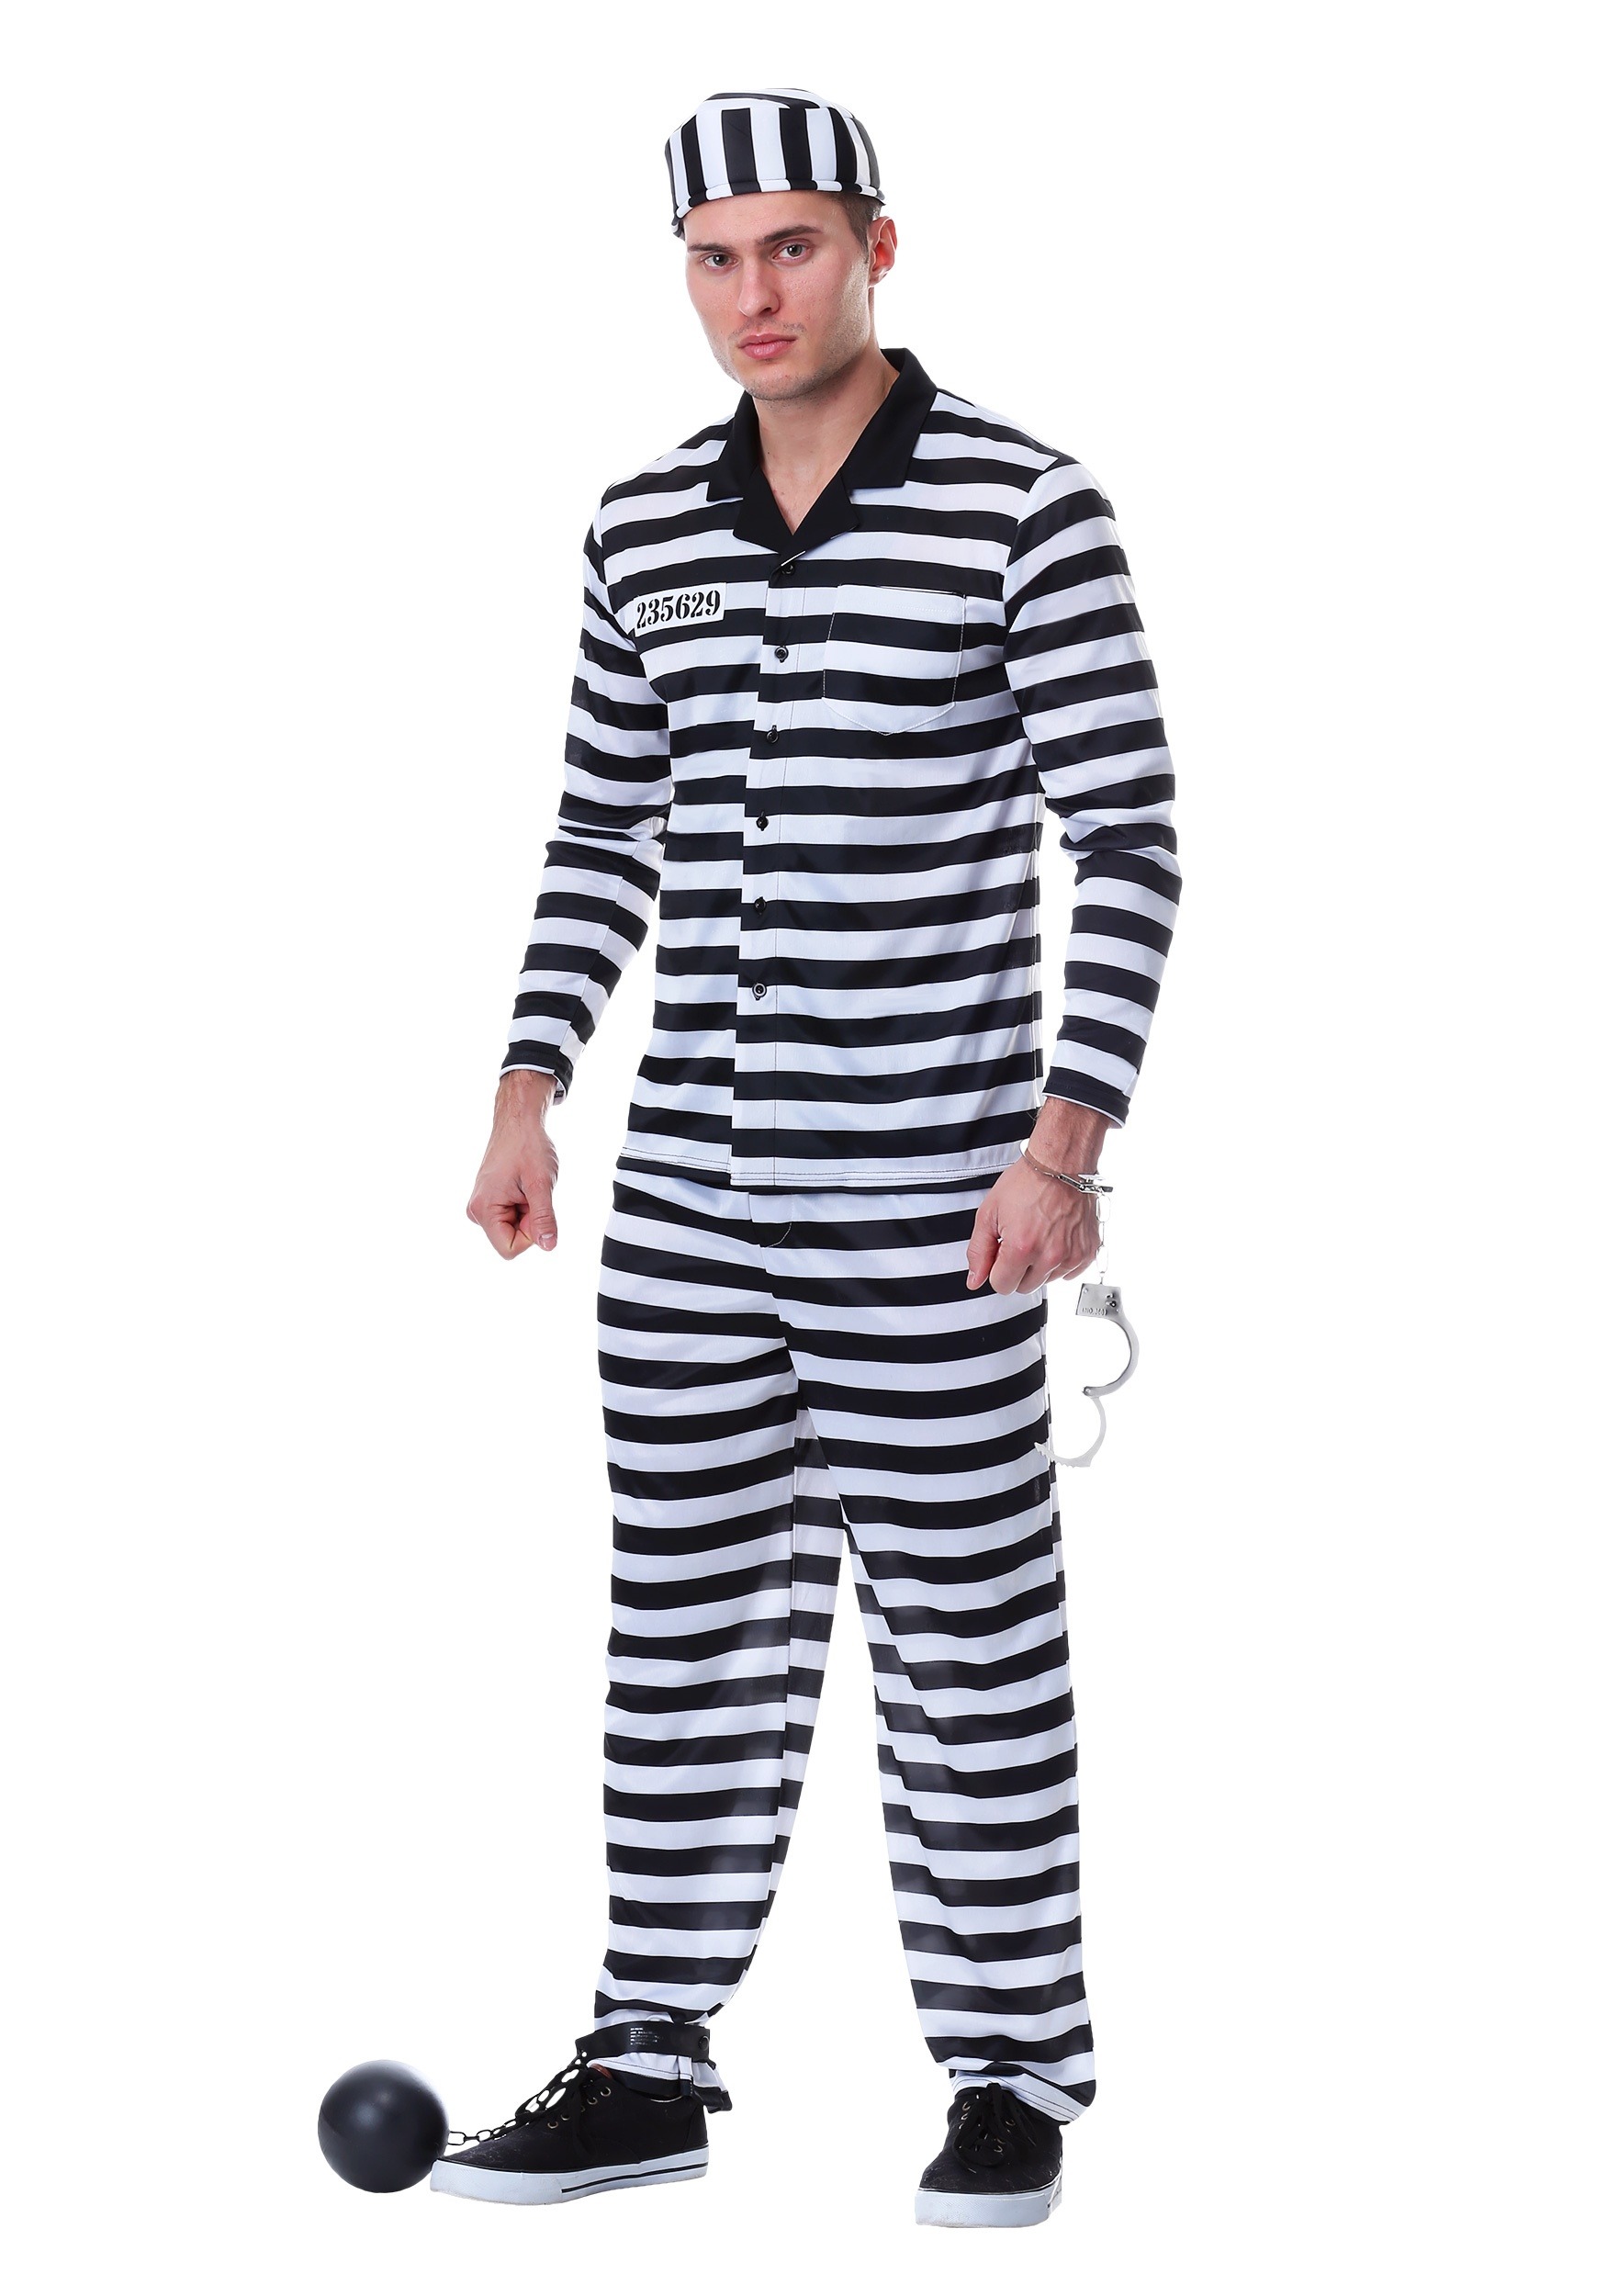 Men’s Plus Size Deluxe Button Down Jailbird Costume